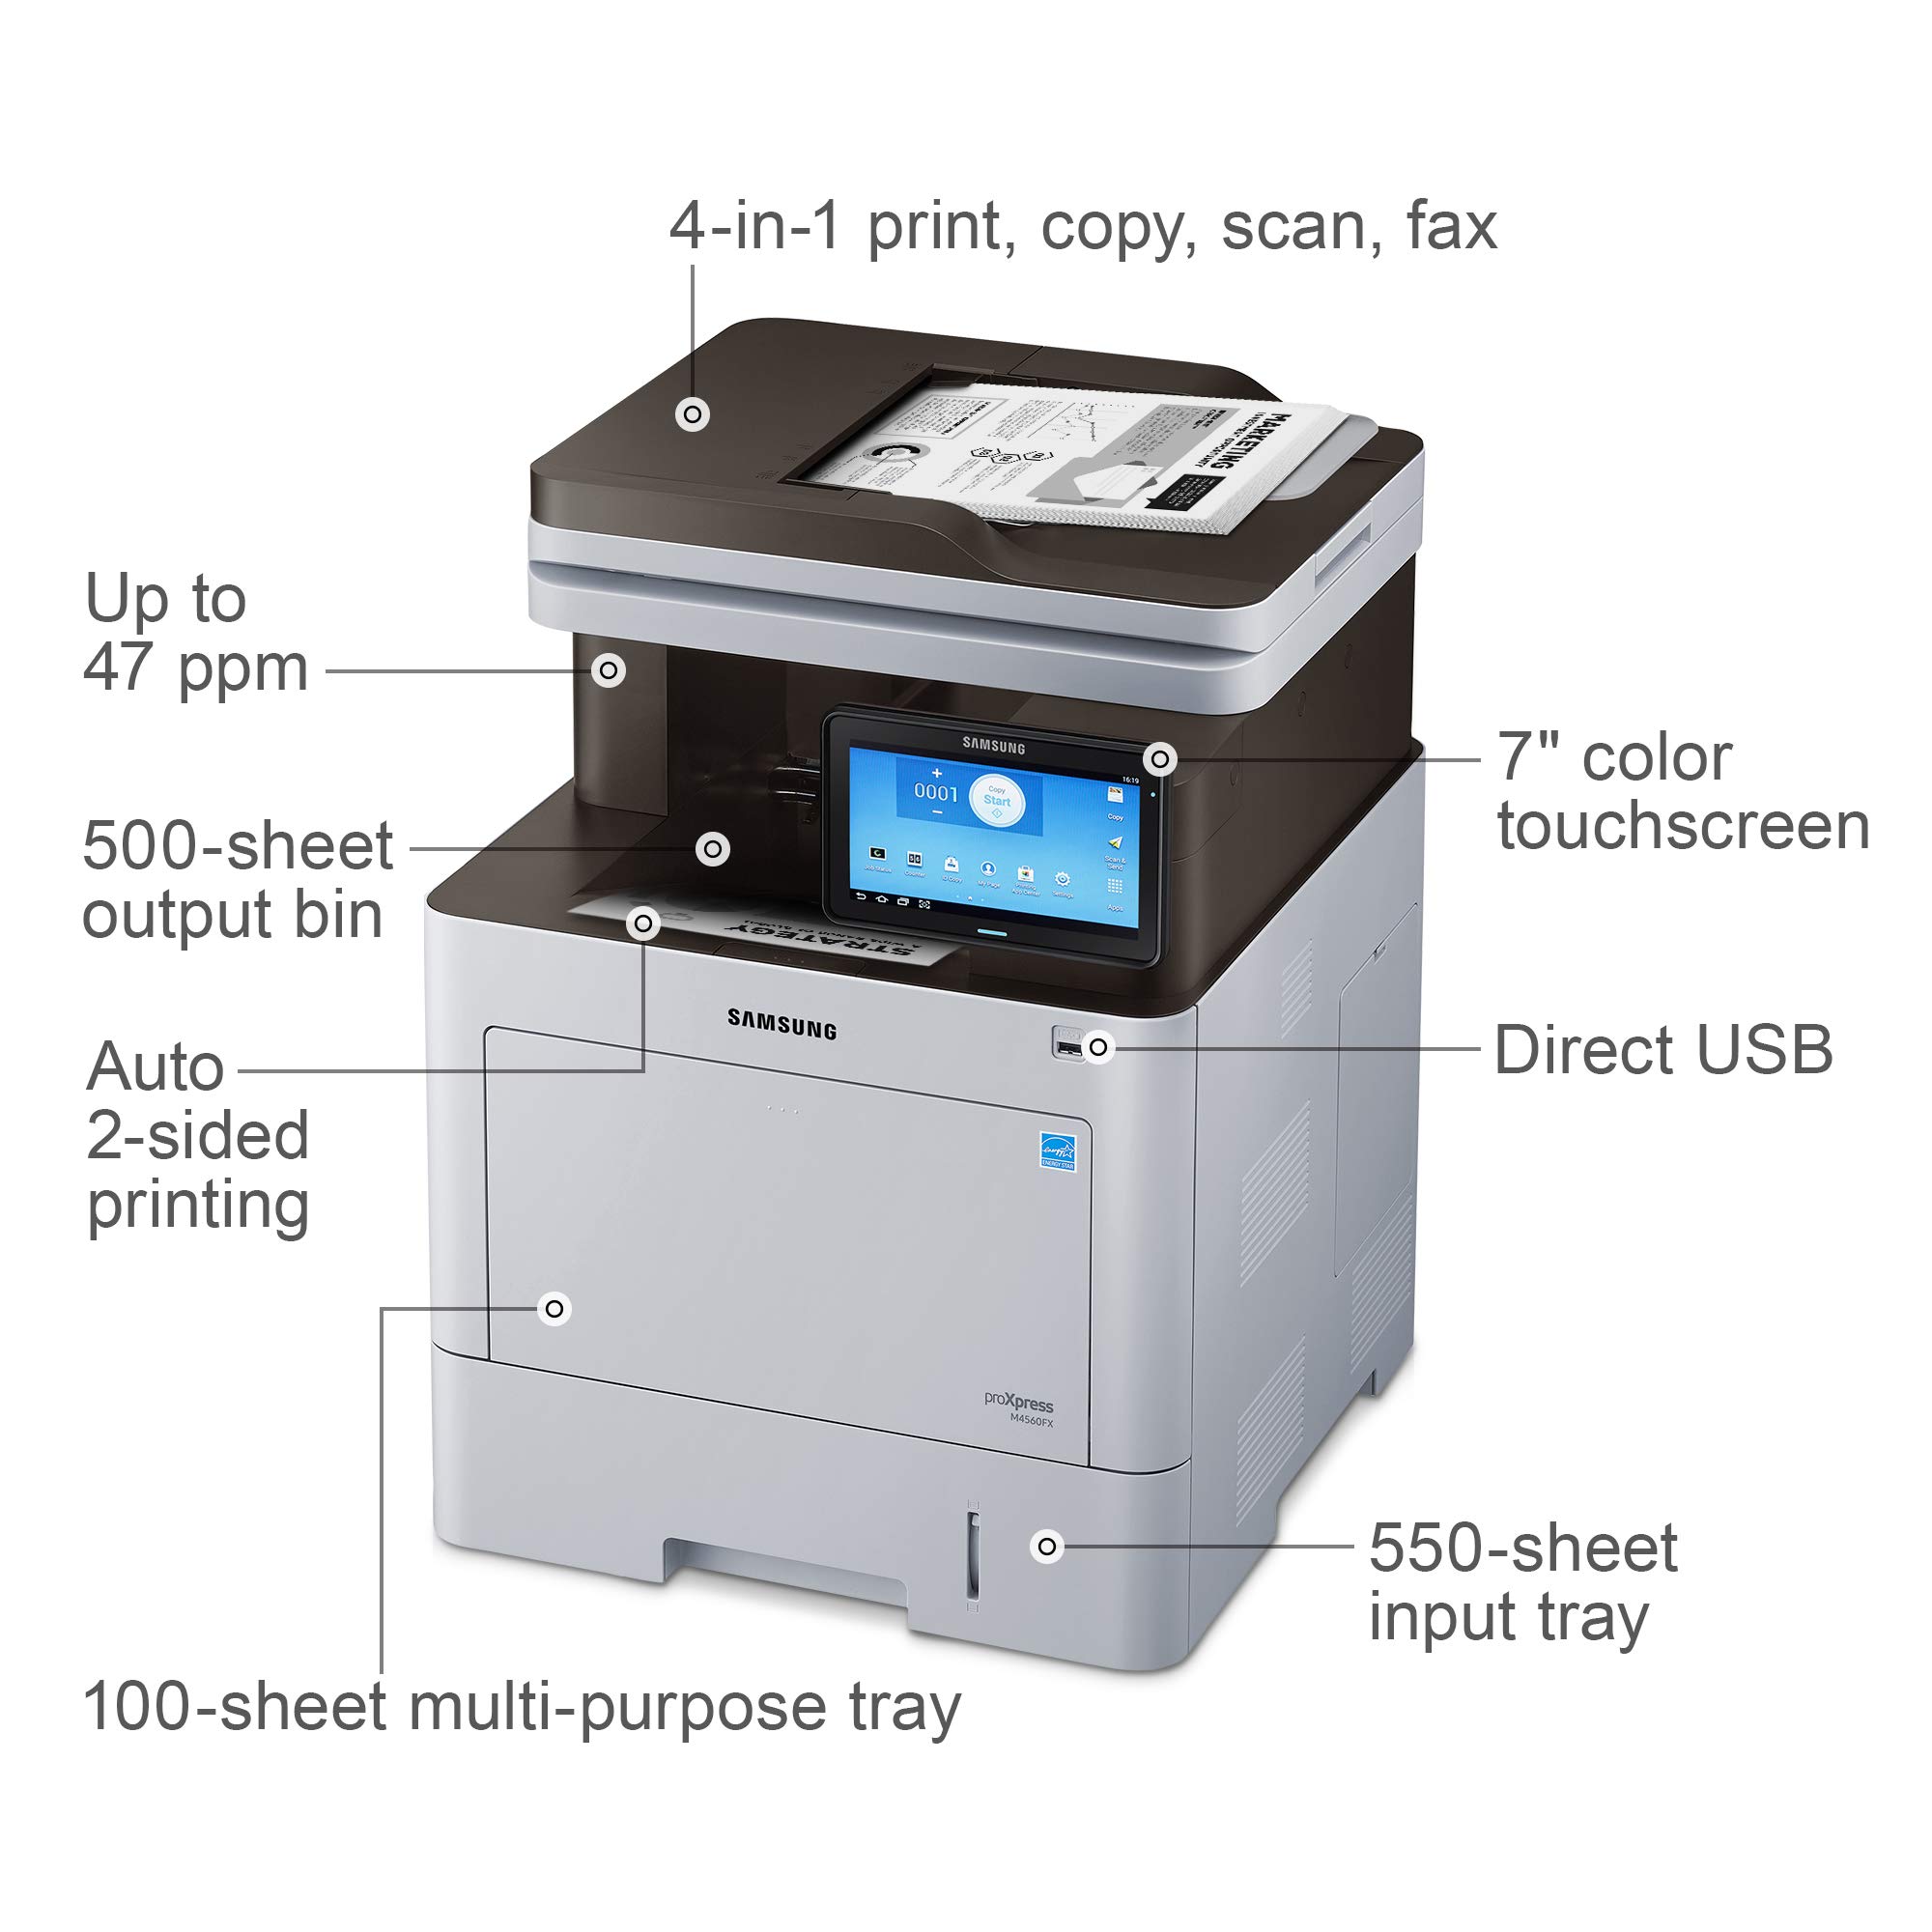 Samsung ProXpress SL-M4560 Laser Multifunction Printer series